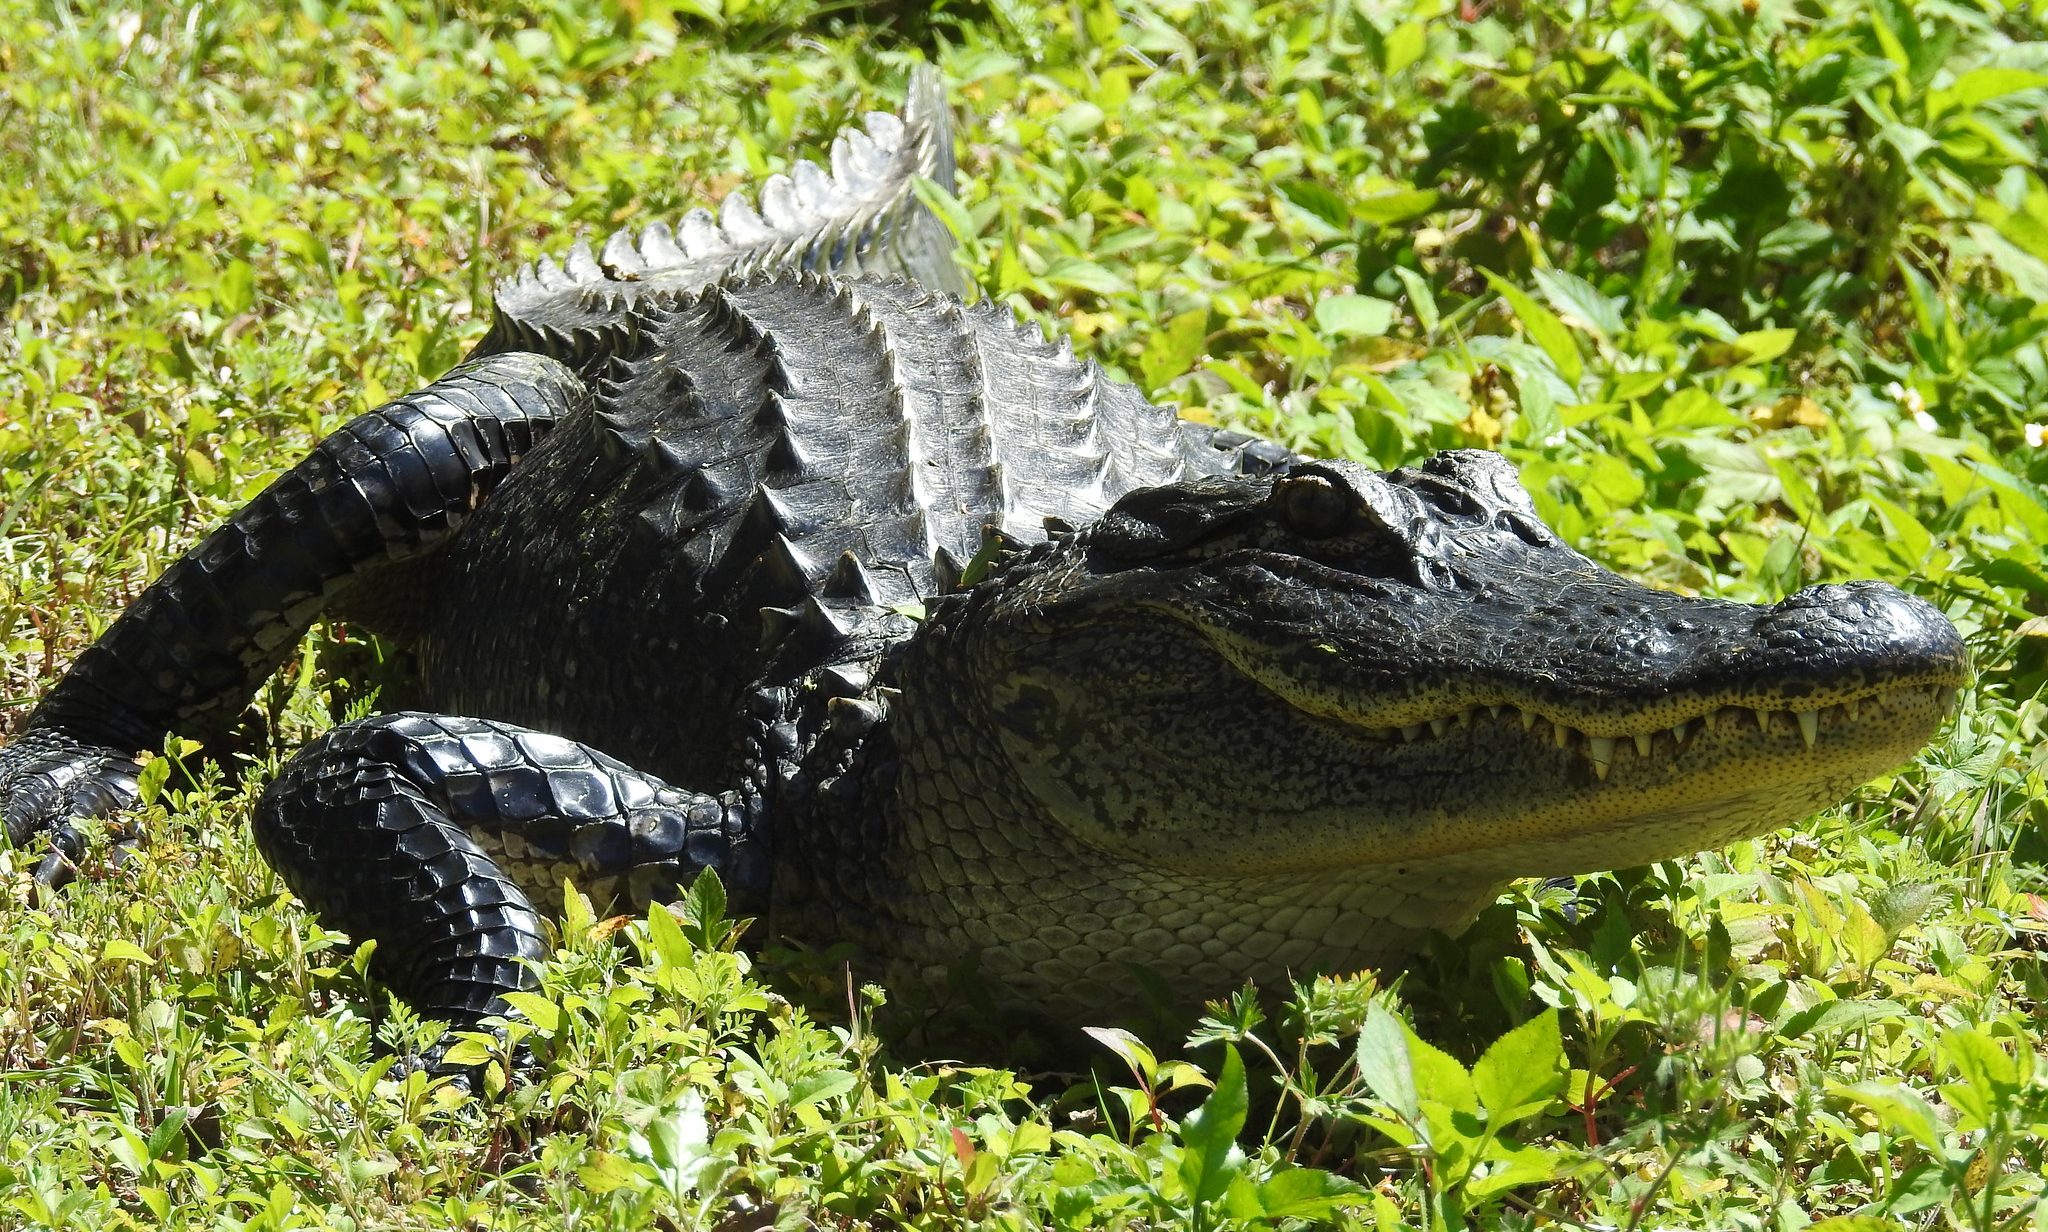 Be Alligator Aware for Florida's Alligator Mating Season